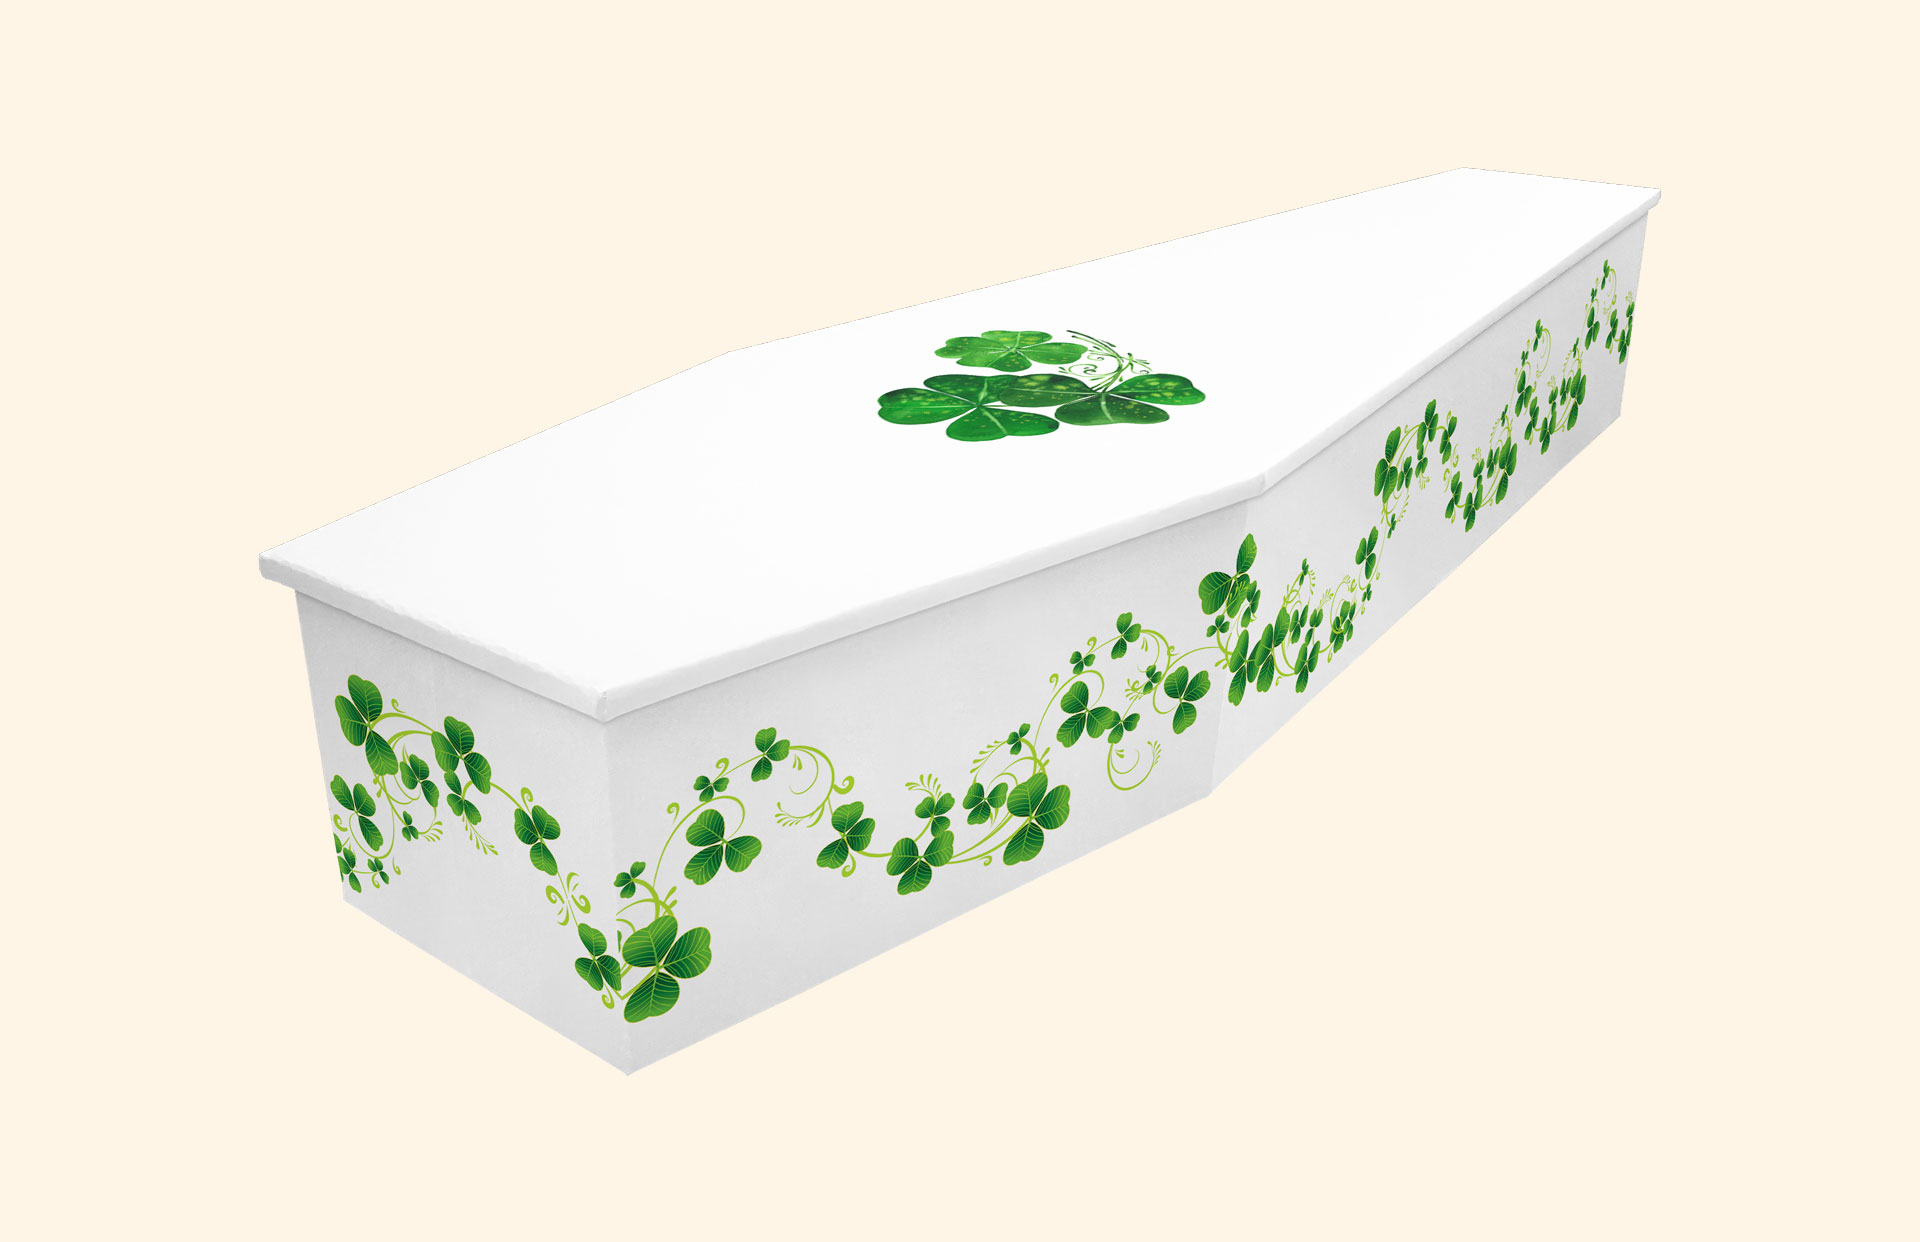 Clover design on a cardboard coffin